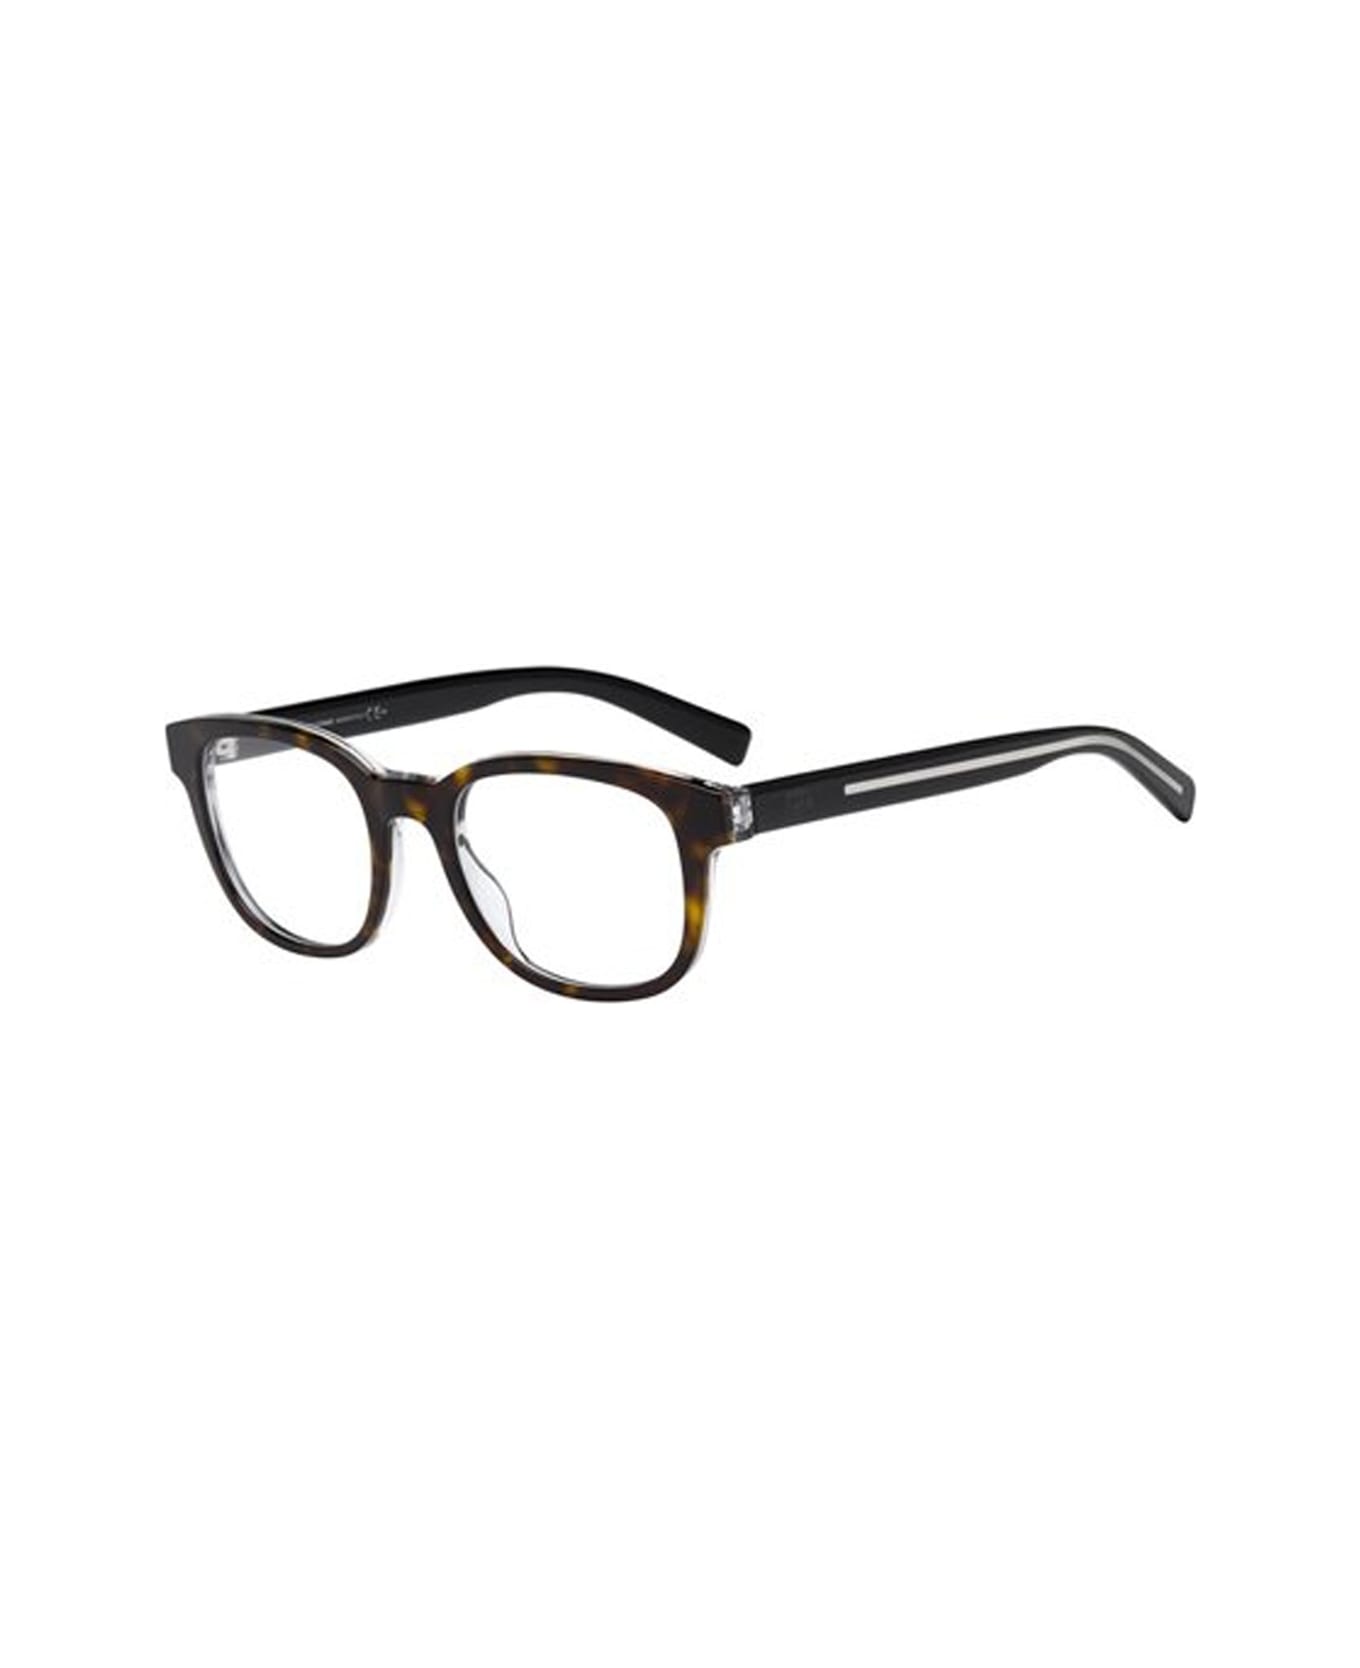 Dior Eyewear Blacktie 202 Glasses - Marrone